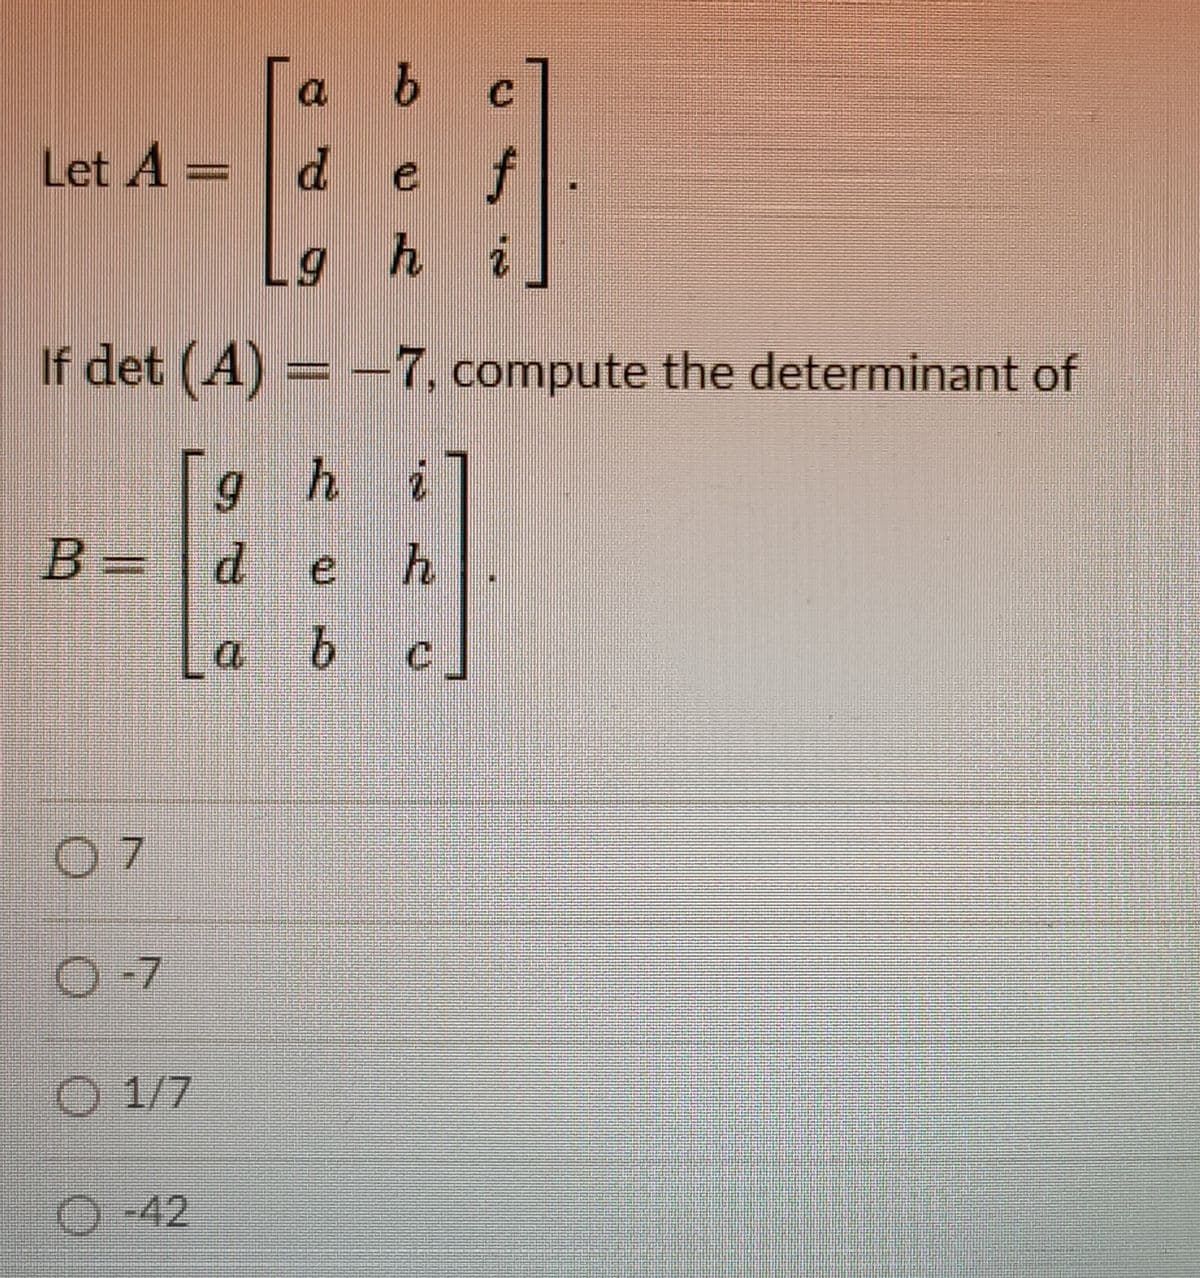 Let A =
d.
ef
Lg h i
If det (A) =-7, compute the determinant of
g h i
B =
deh
C.
O-7
1/7
O -42
